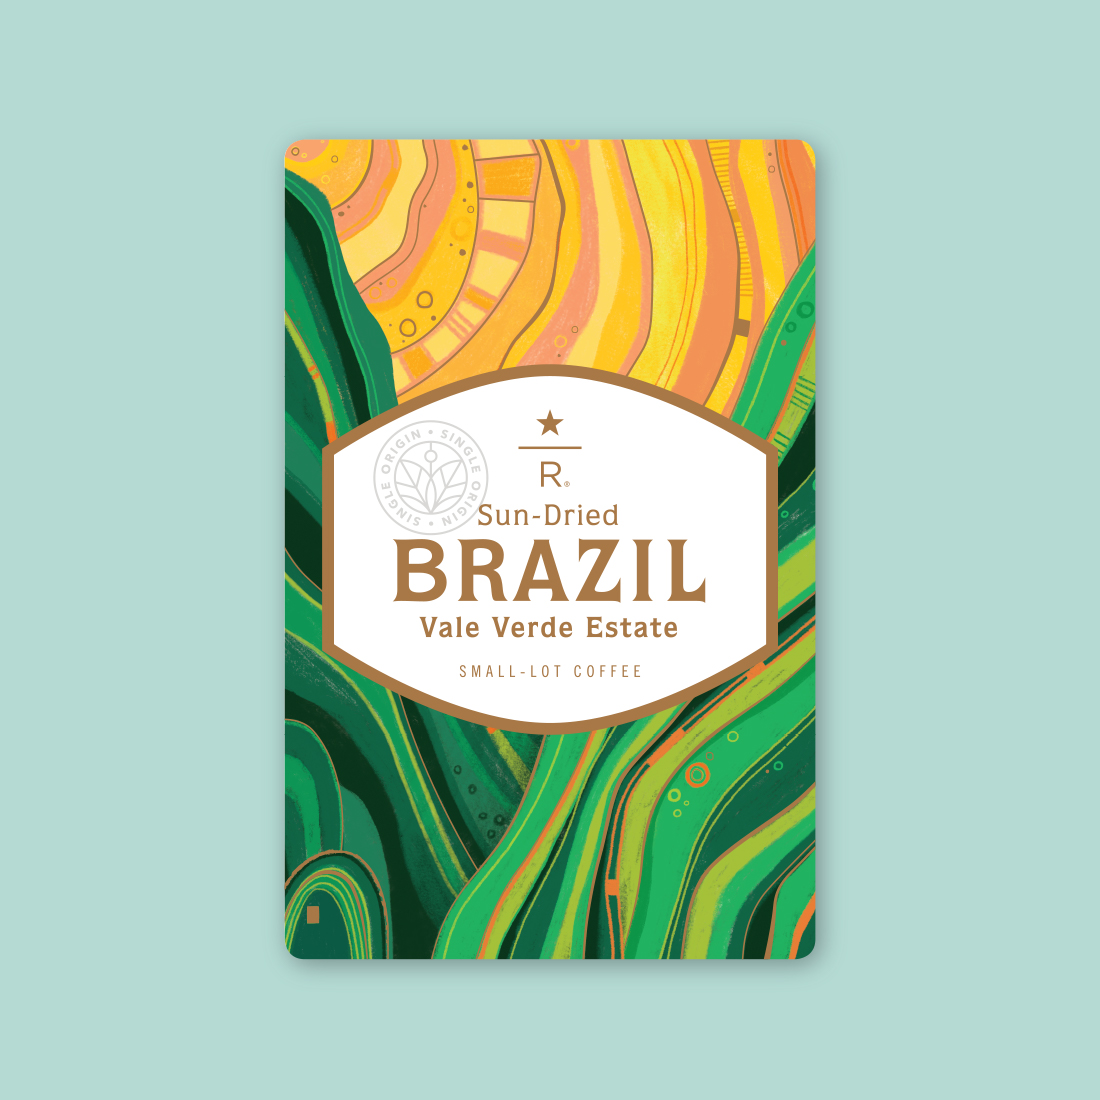 Coffee card illustration for SUN-DRIED BRAZIL VALE VERDE ESTATE